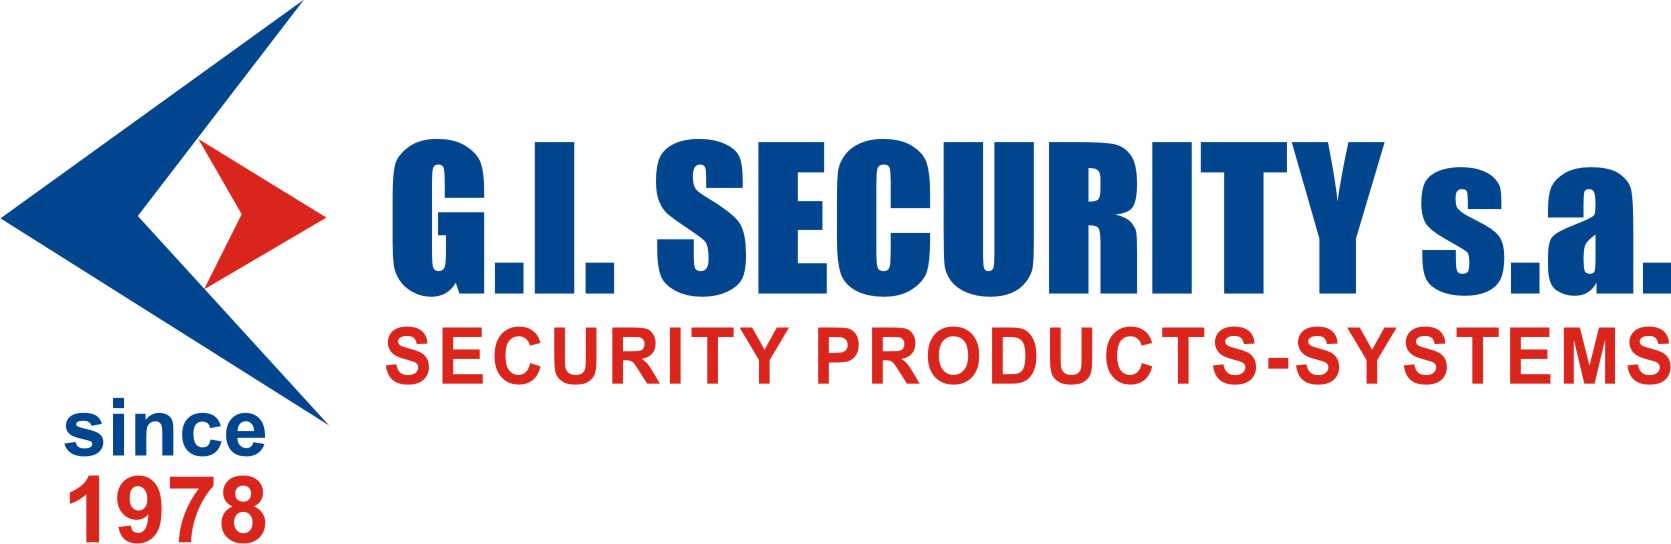 GI SECURITY logo